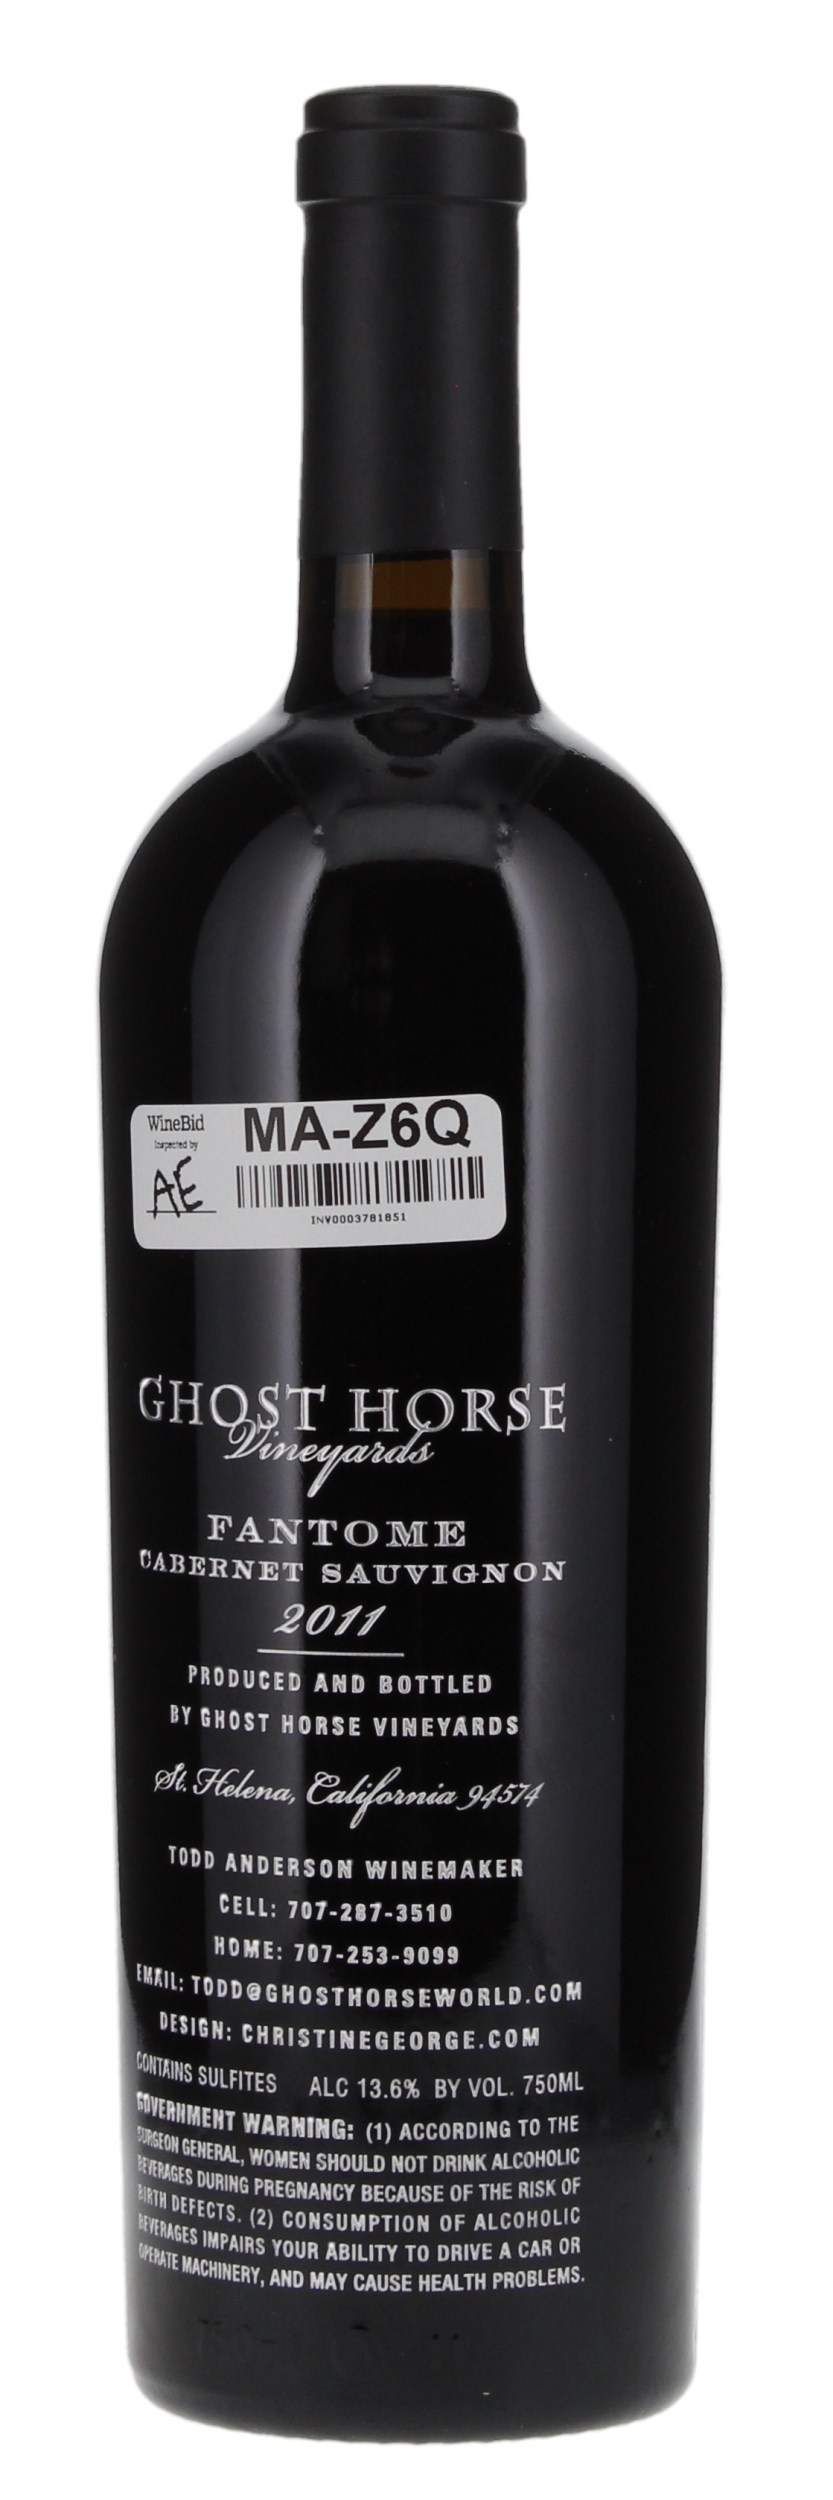 2011 Ghost Horse Vineyard Fantome Cabernet Sauvignon, 750ml